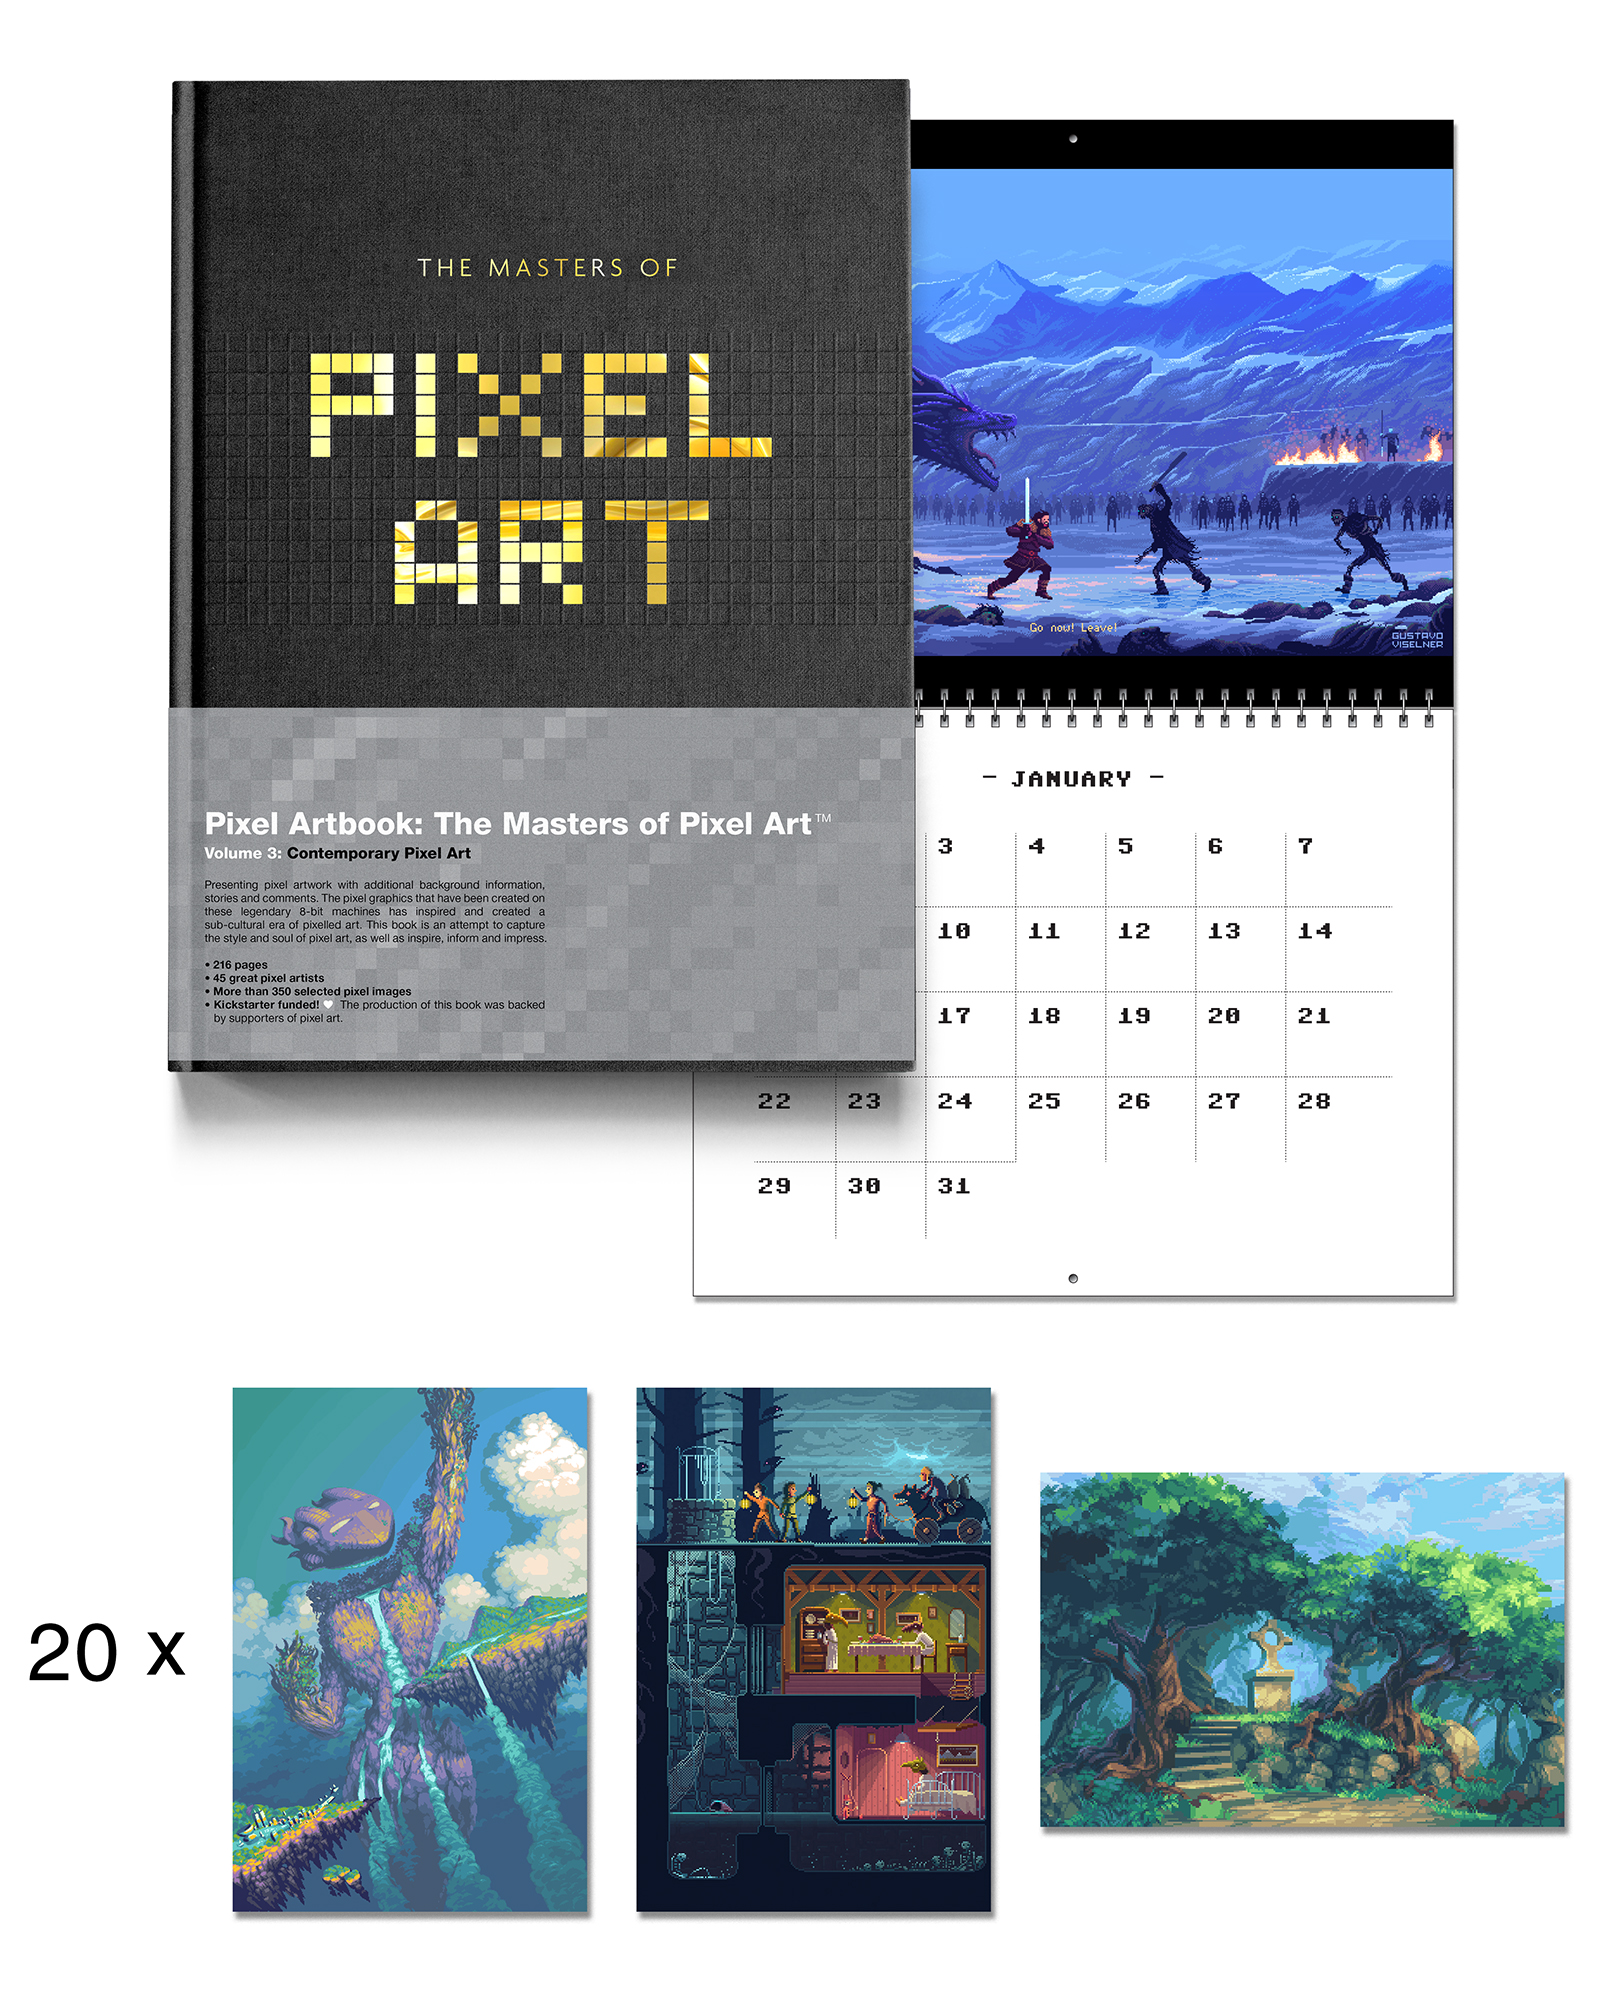 Package The Masters of Pixel Art volume 3 & Calendar & Postcards